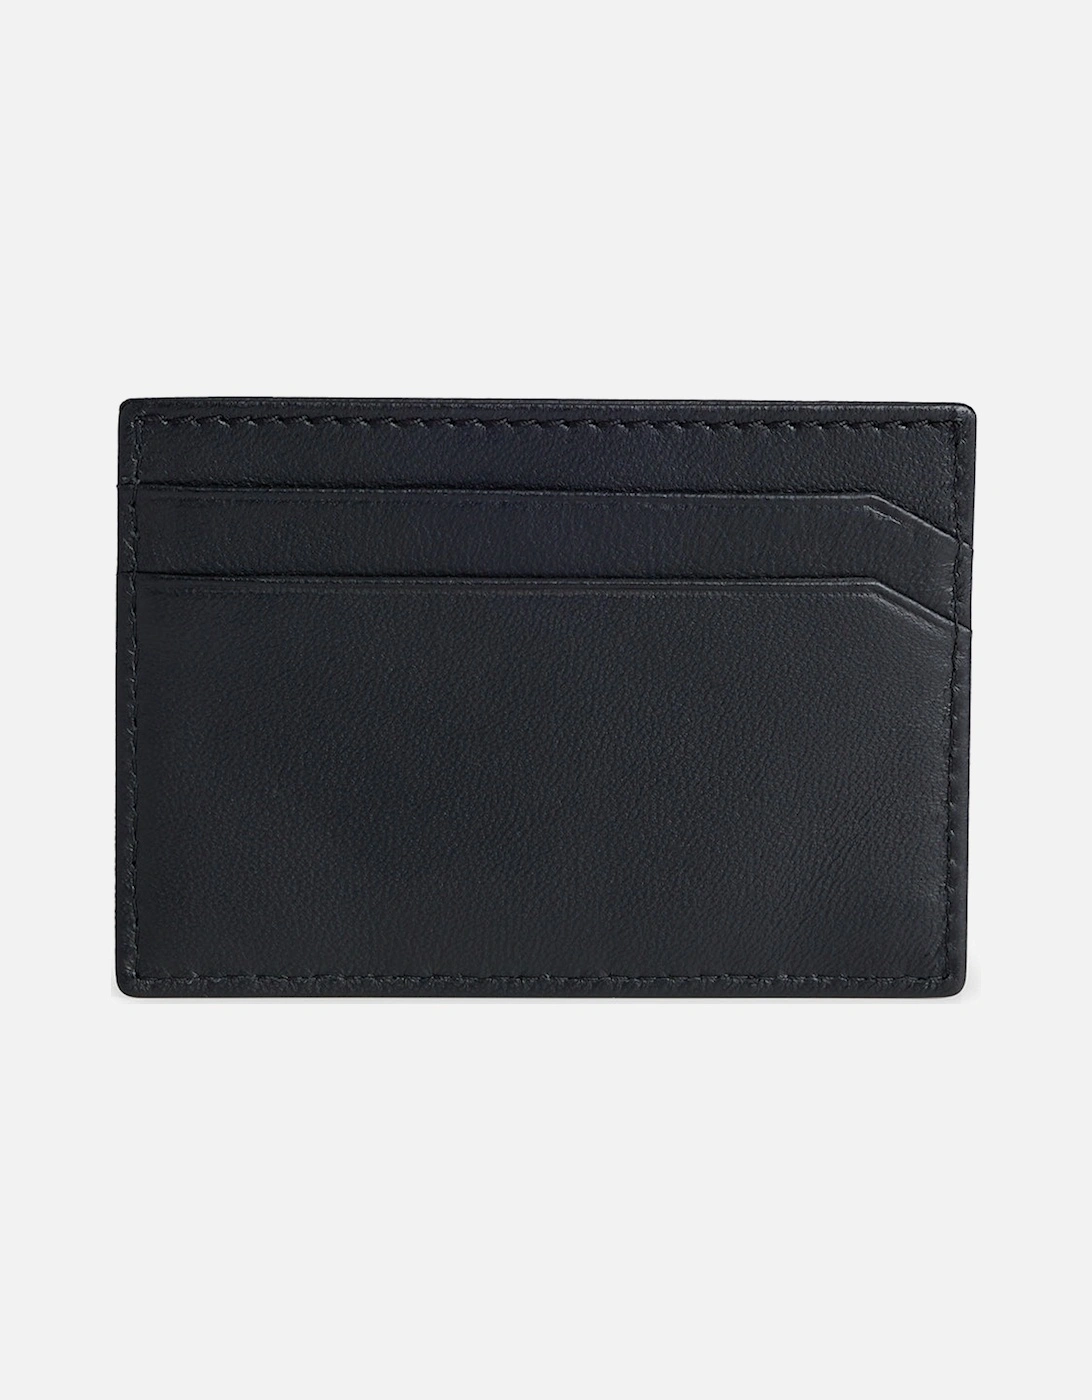 Tibby-S Leather Cardholder, Black